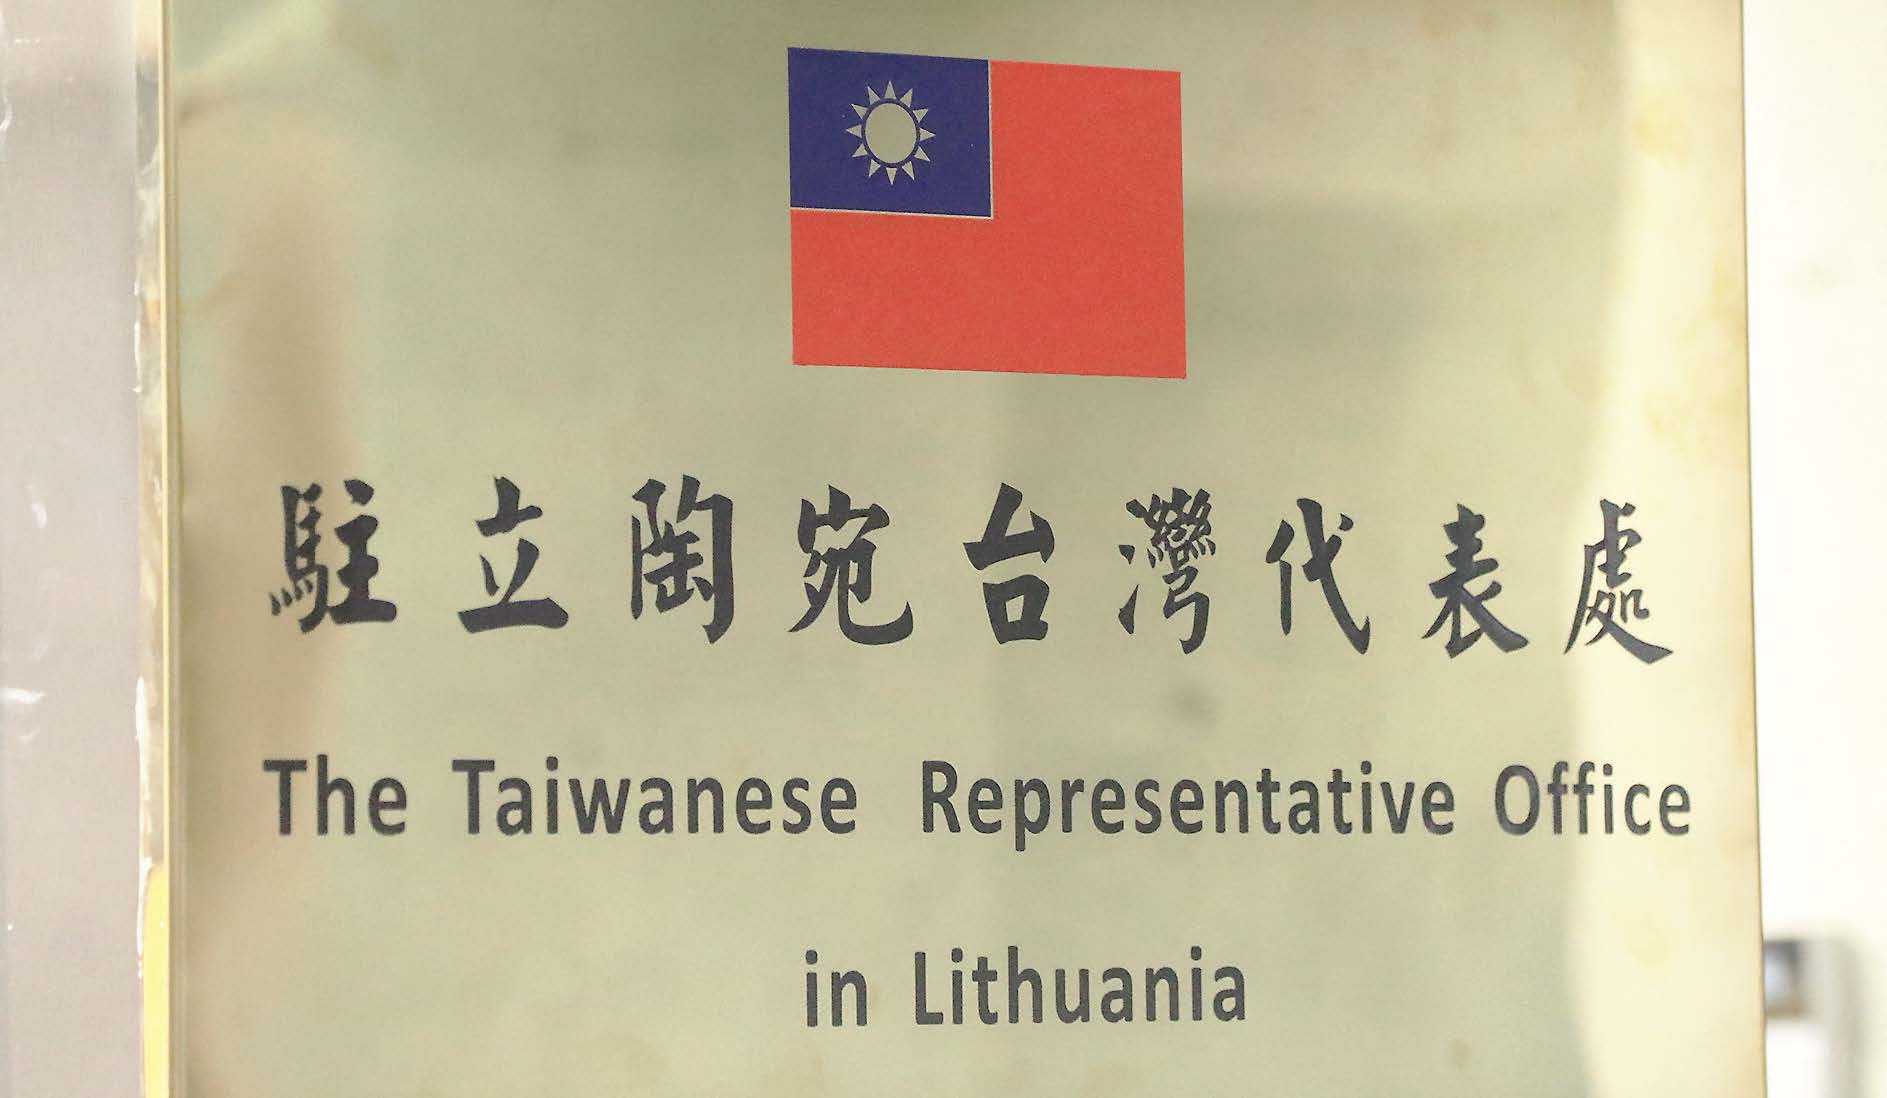 Tiongkok Turunkan Hubungan Diplomatik dengan Lithuania